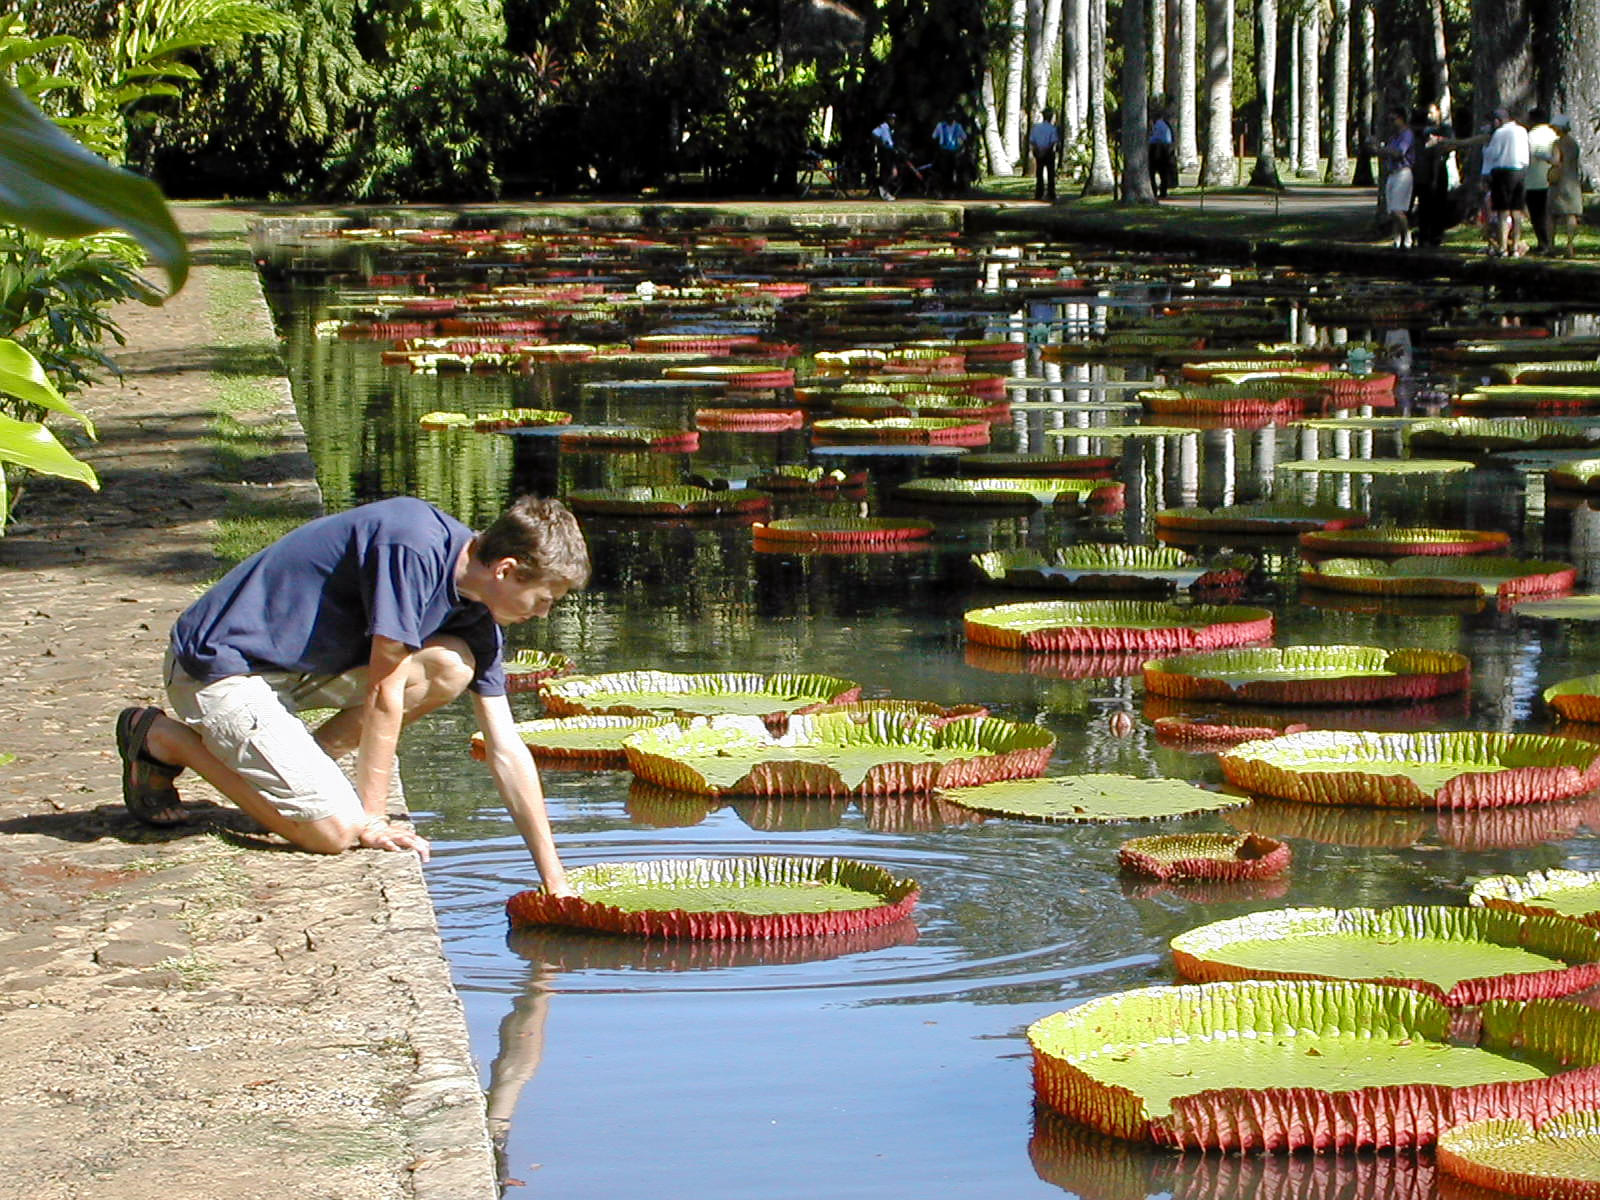 Mauritius National Botanical Garden Overview